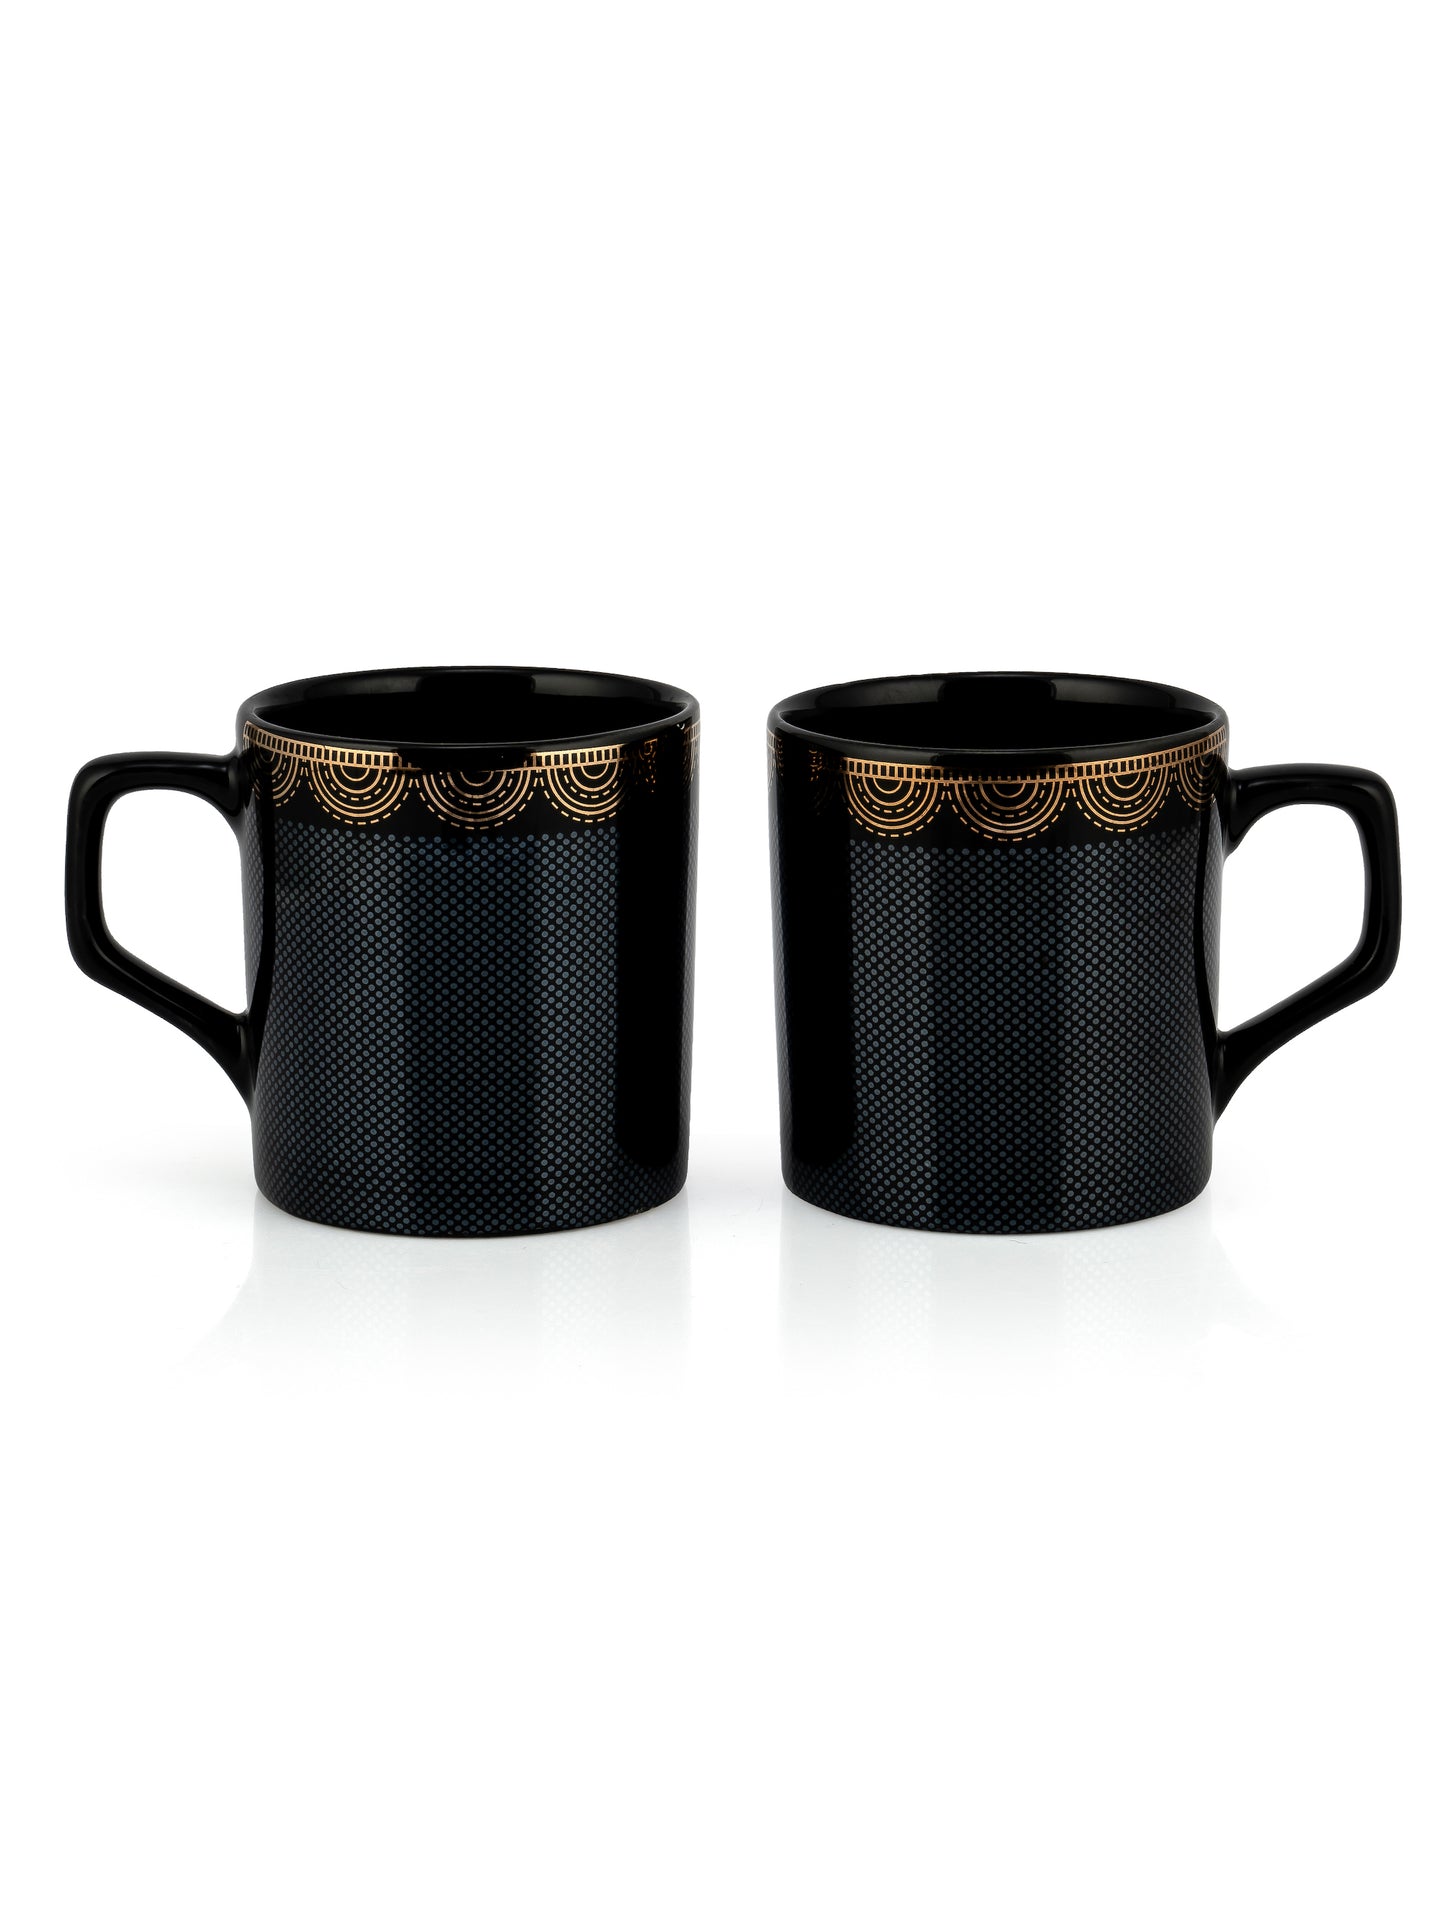 Director Ebony Black Coffee & Tea Mugs, 220ml, Set of 6 (E601)